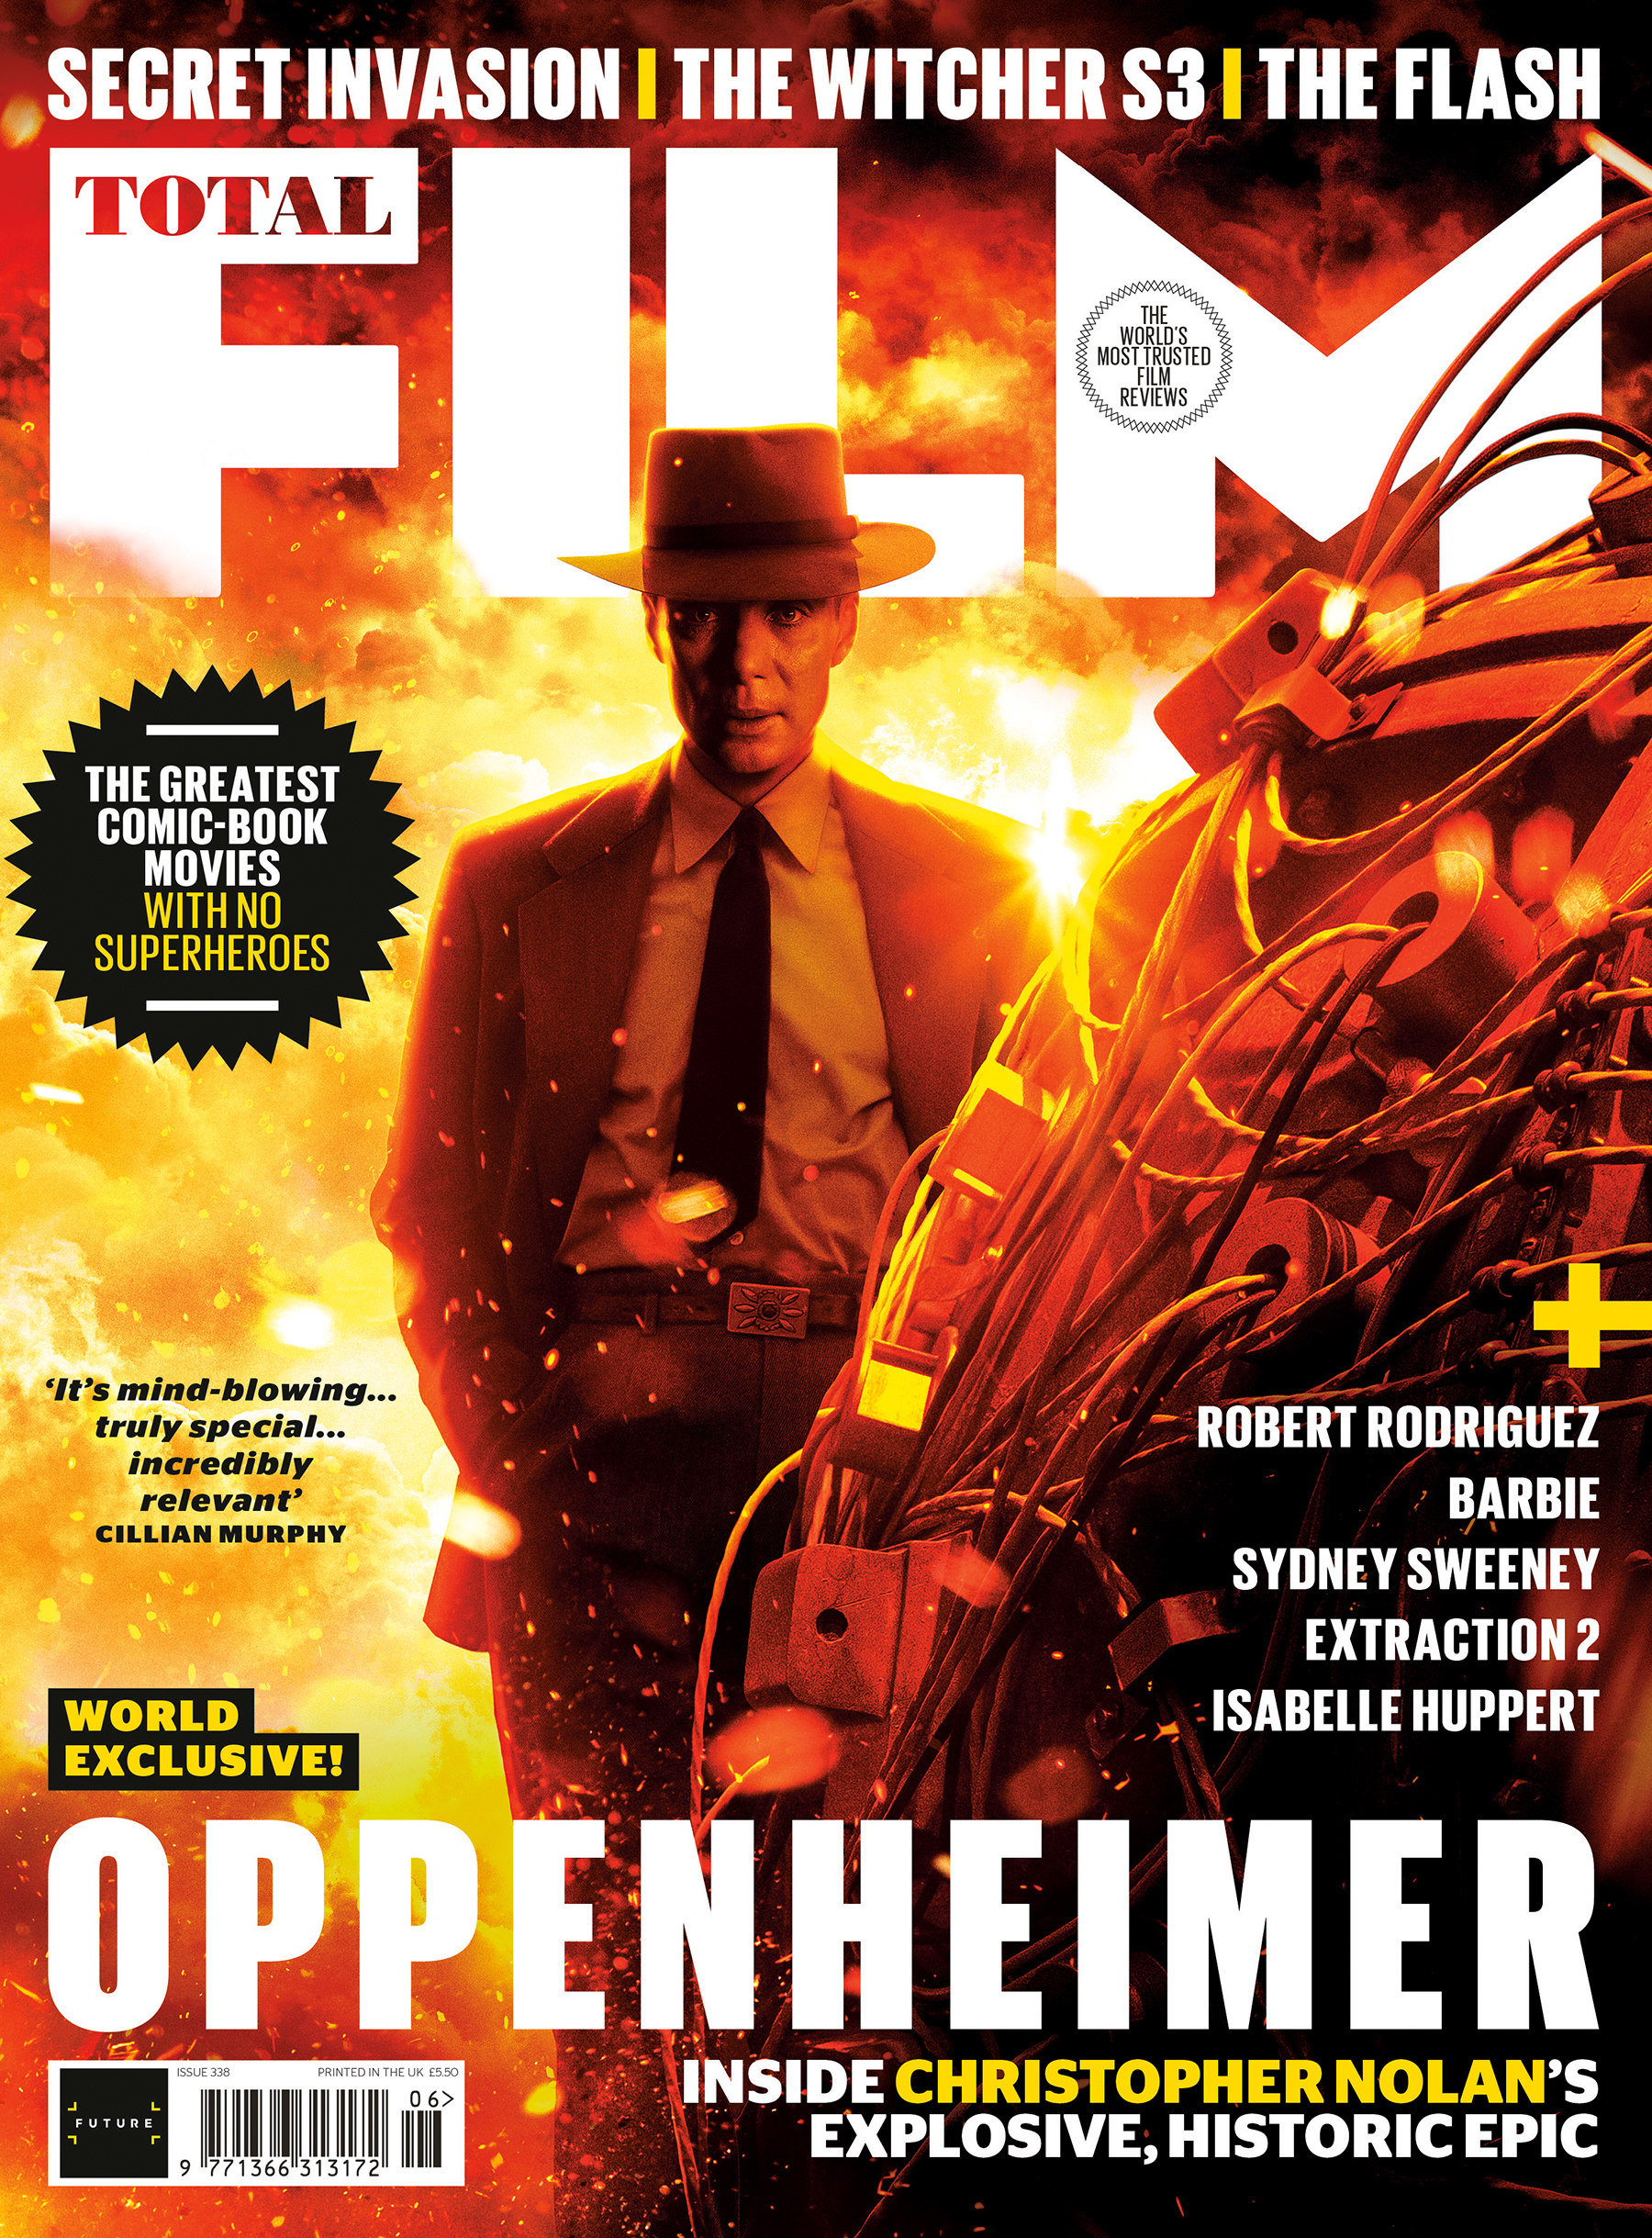 Coperta lui Oppenheimer de la Total Film